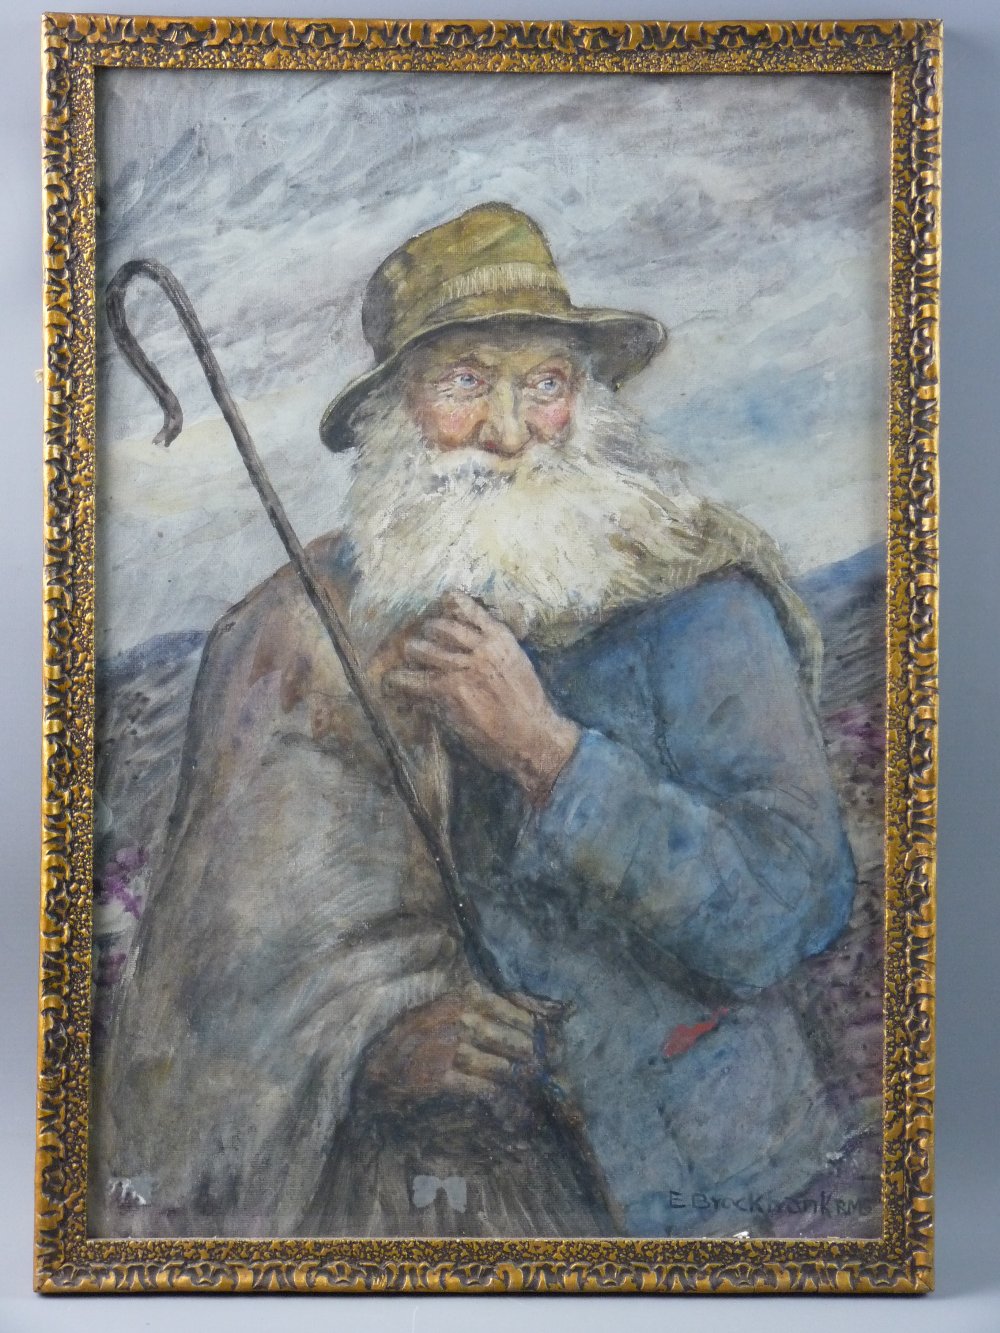 ELIZABETH BROCKBANK watercolour - 'Old Ike' the iconic Cumbrian shepherd, 50 x 34 cms